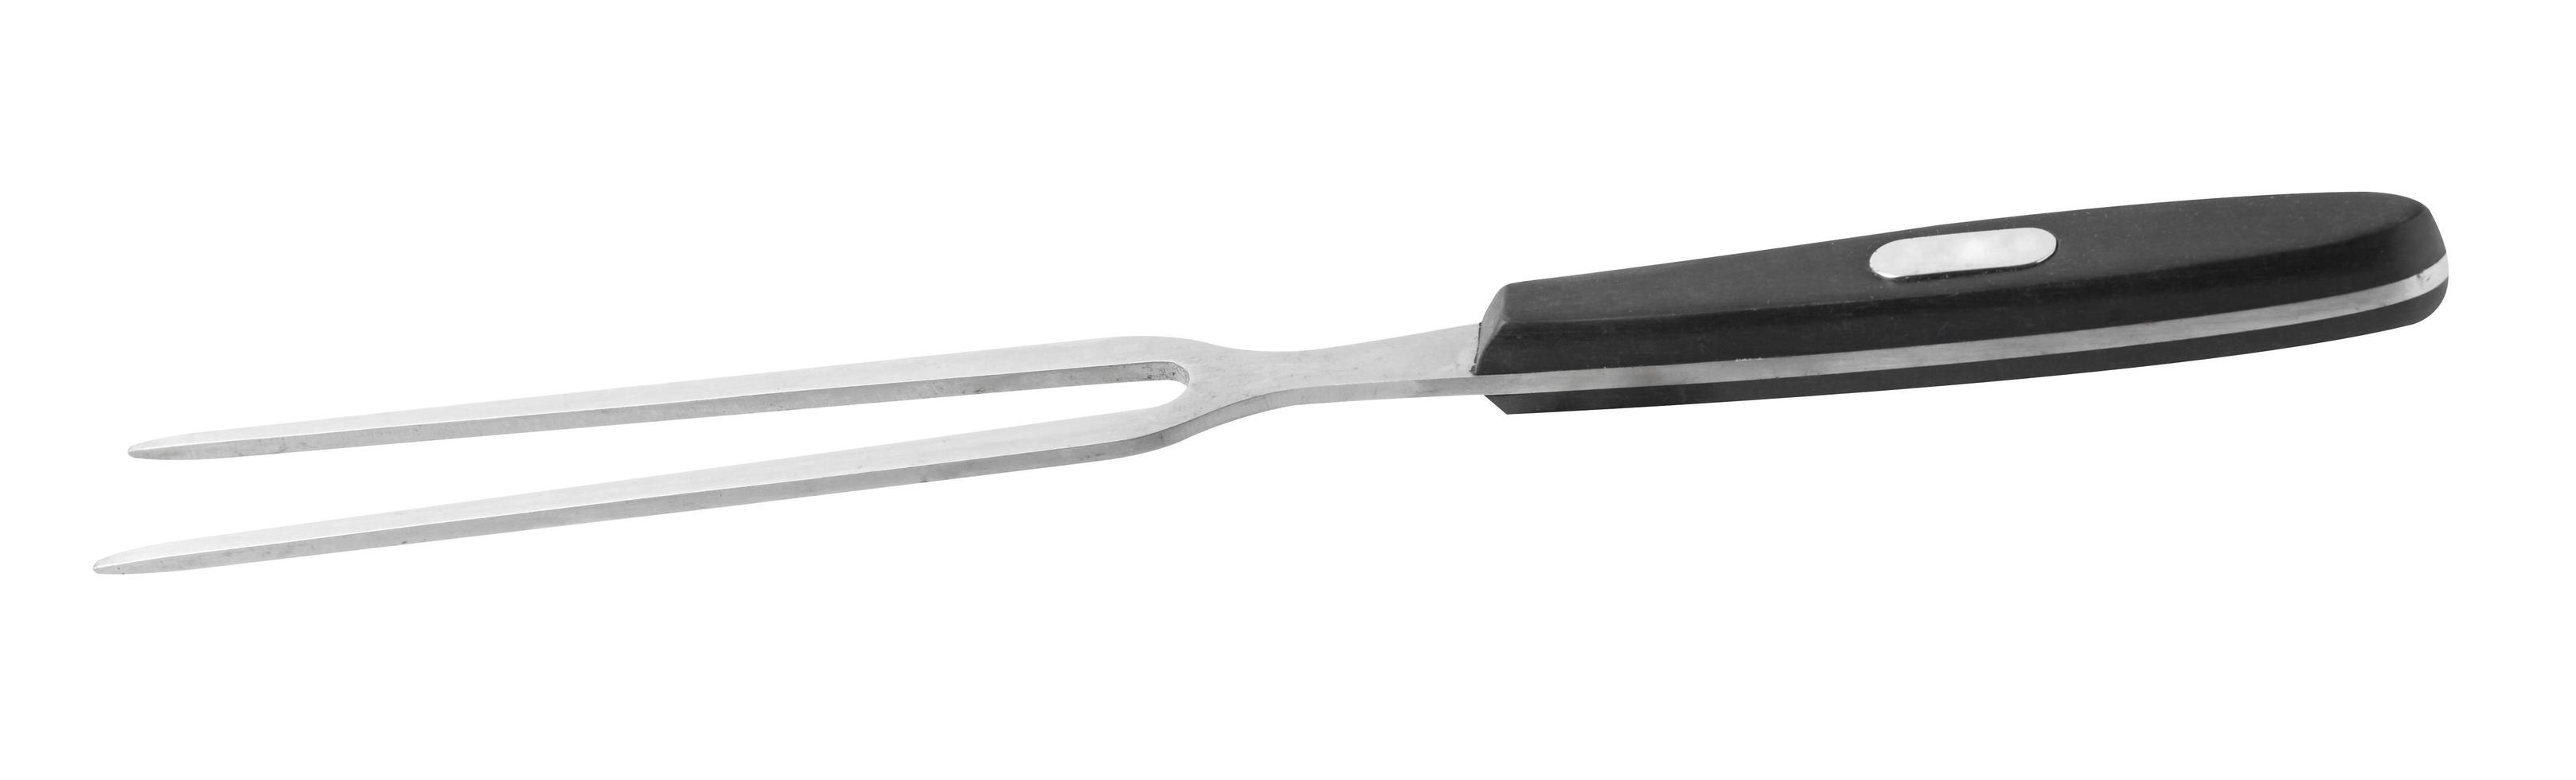 Modern fork on white background photo